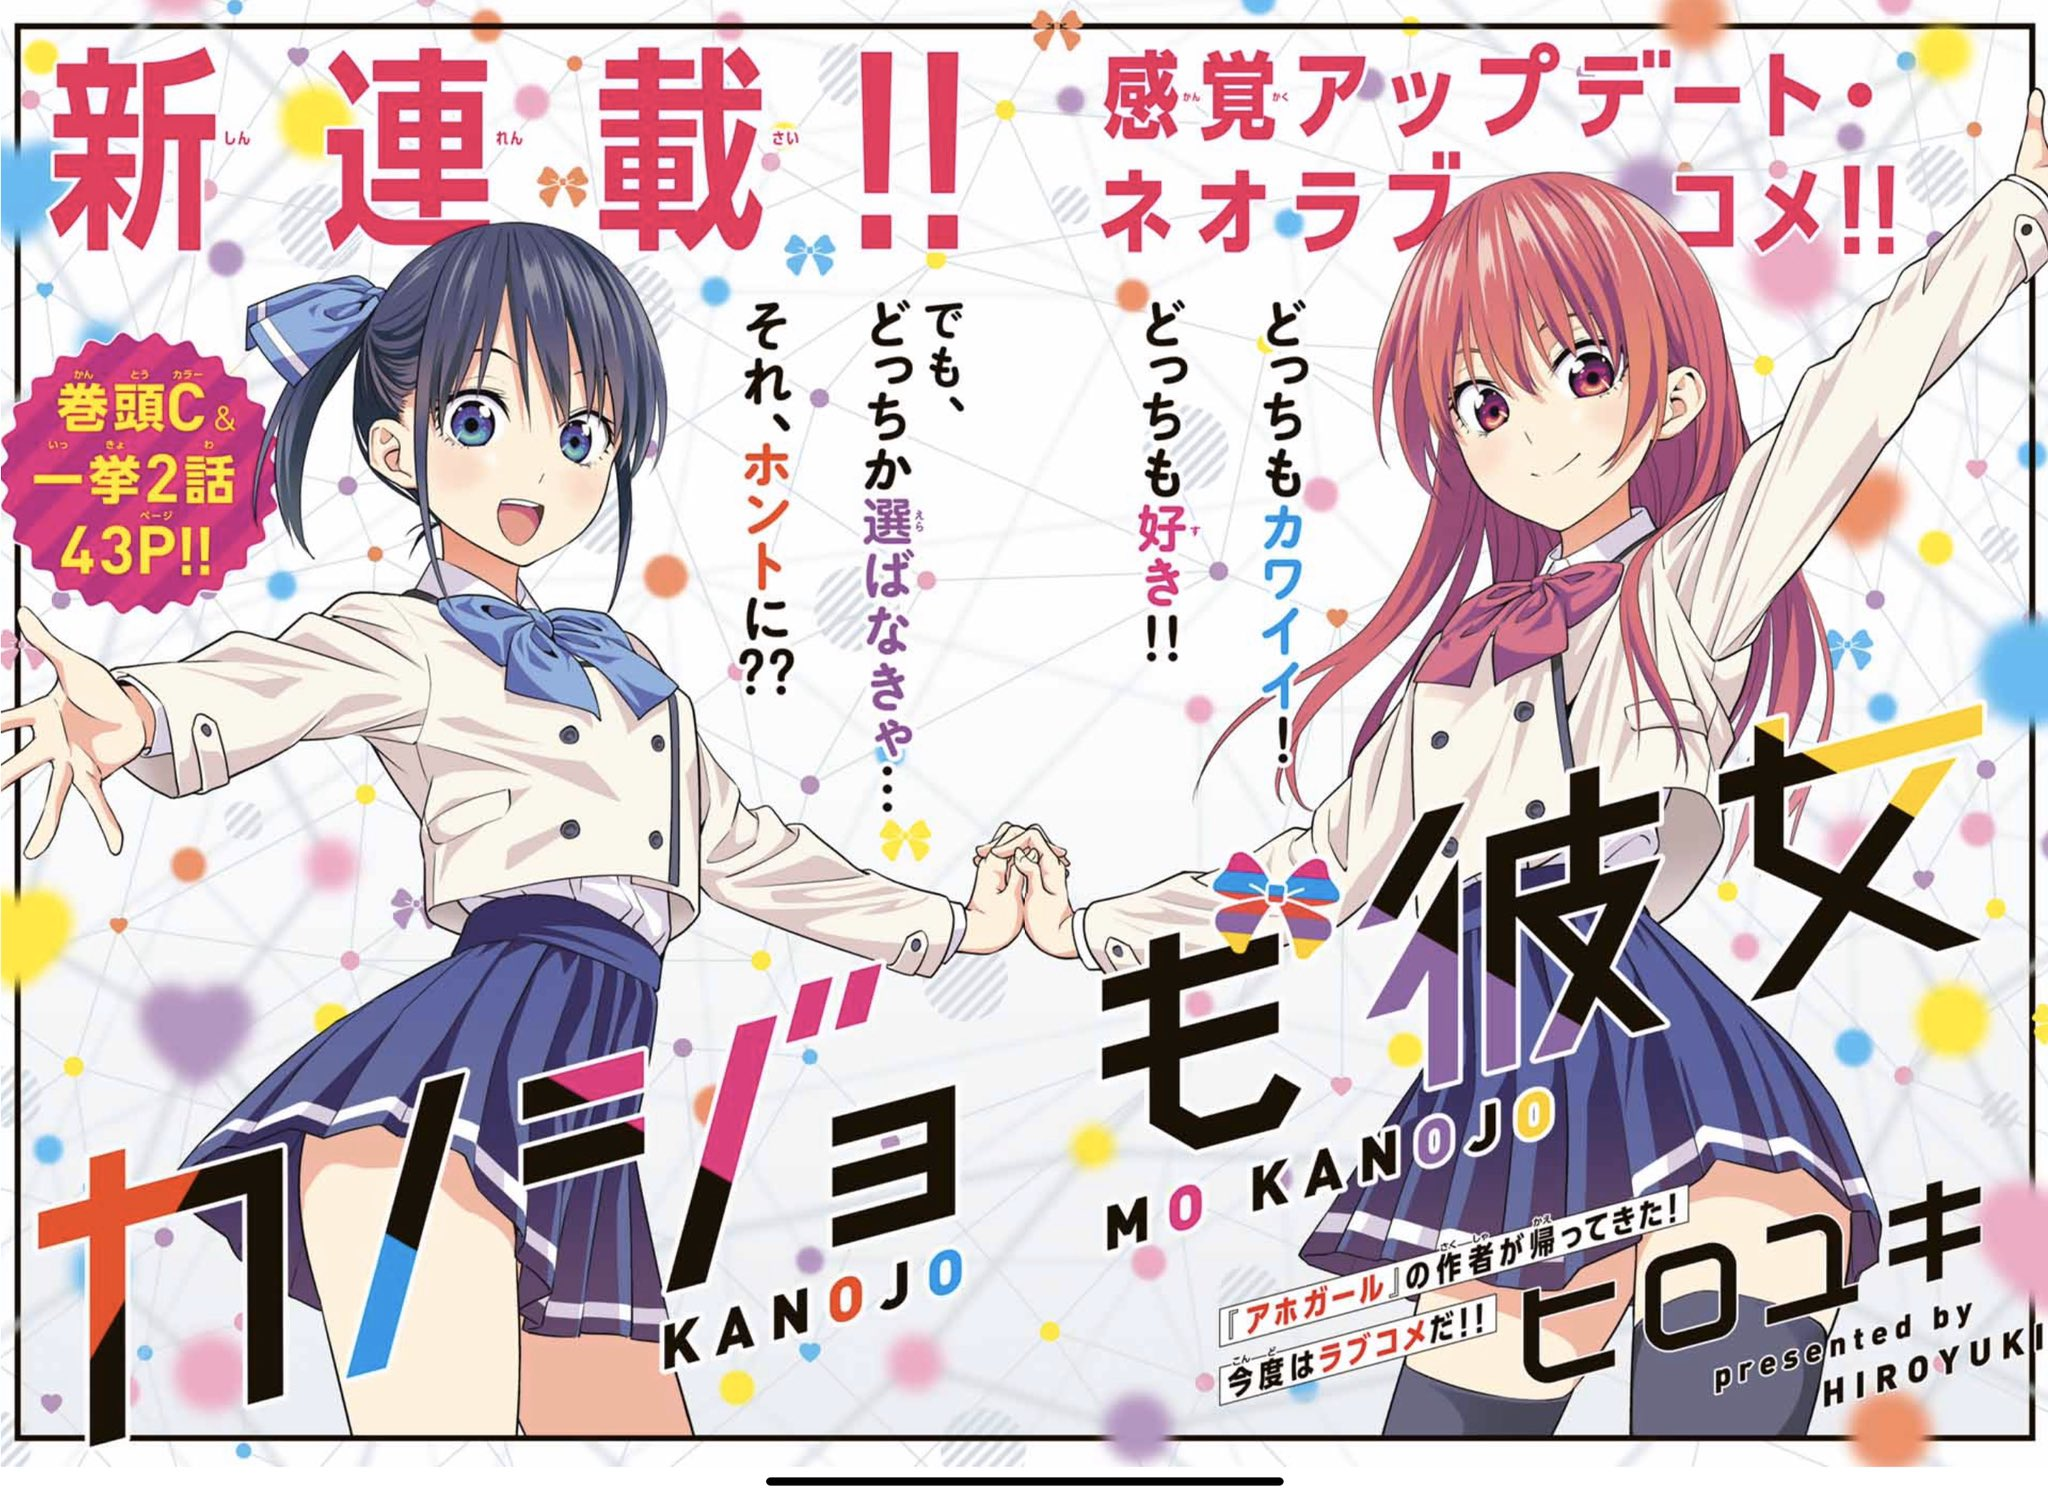 Shonen Magazine News on X: Kanojo mo Kanojo TV anime season 2